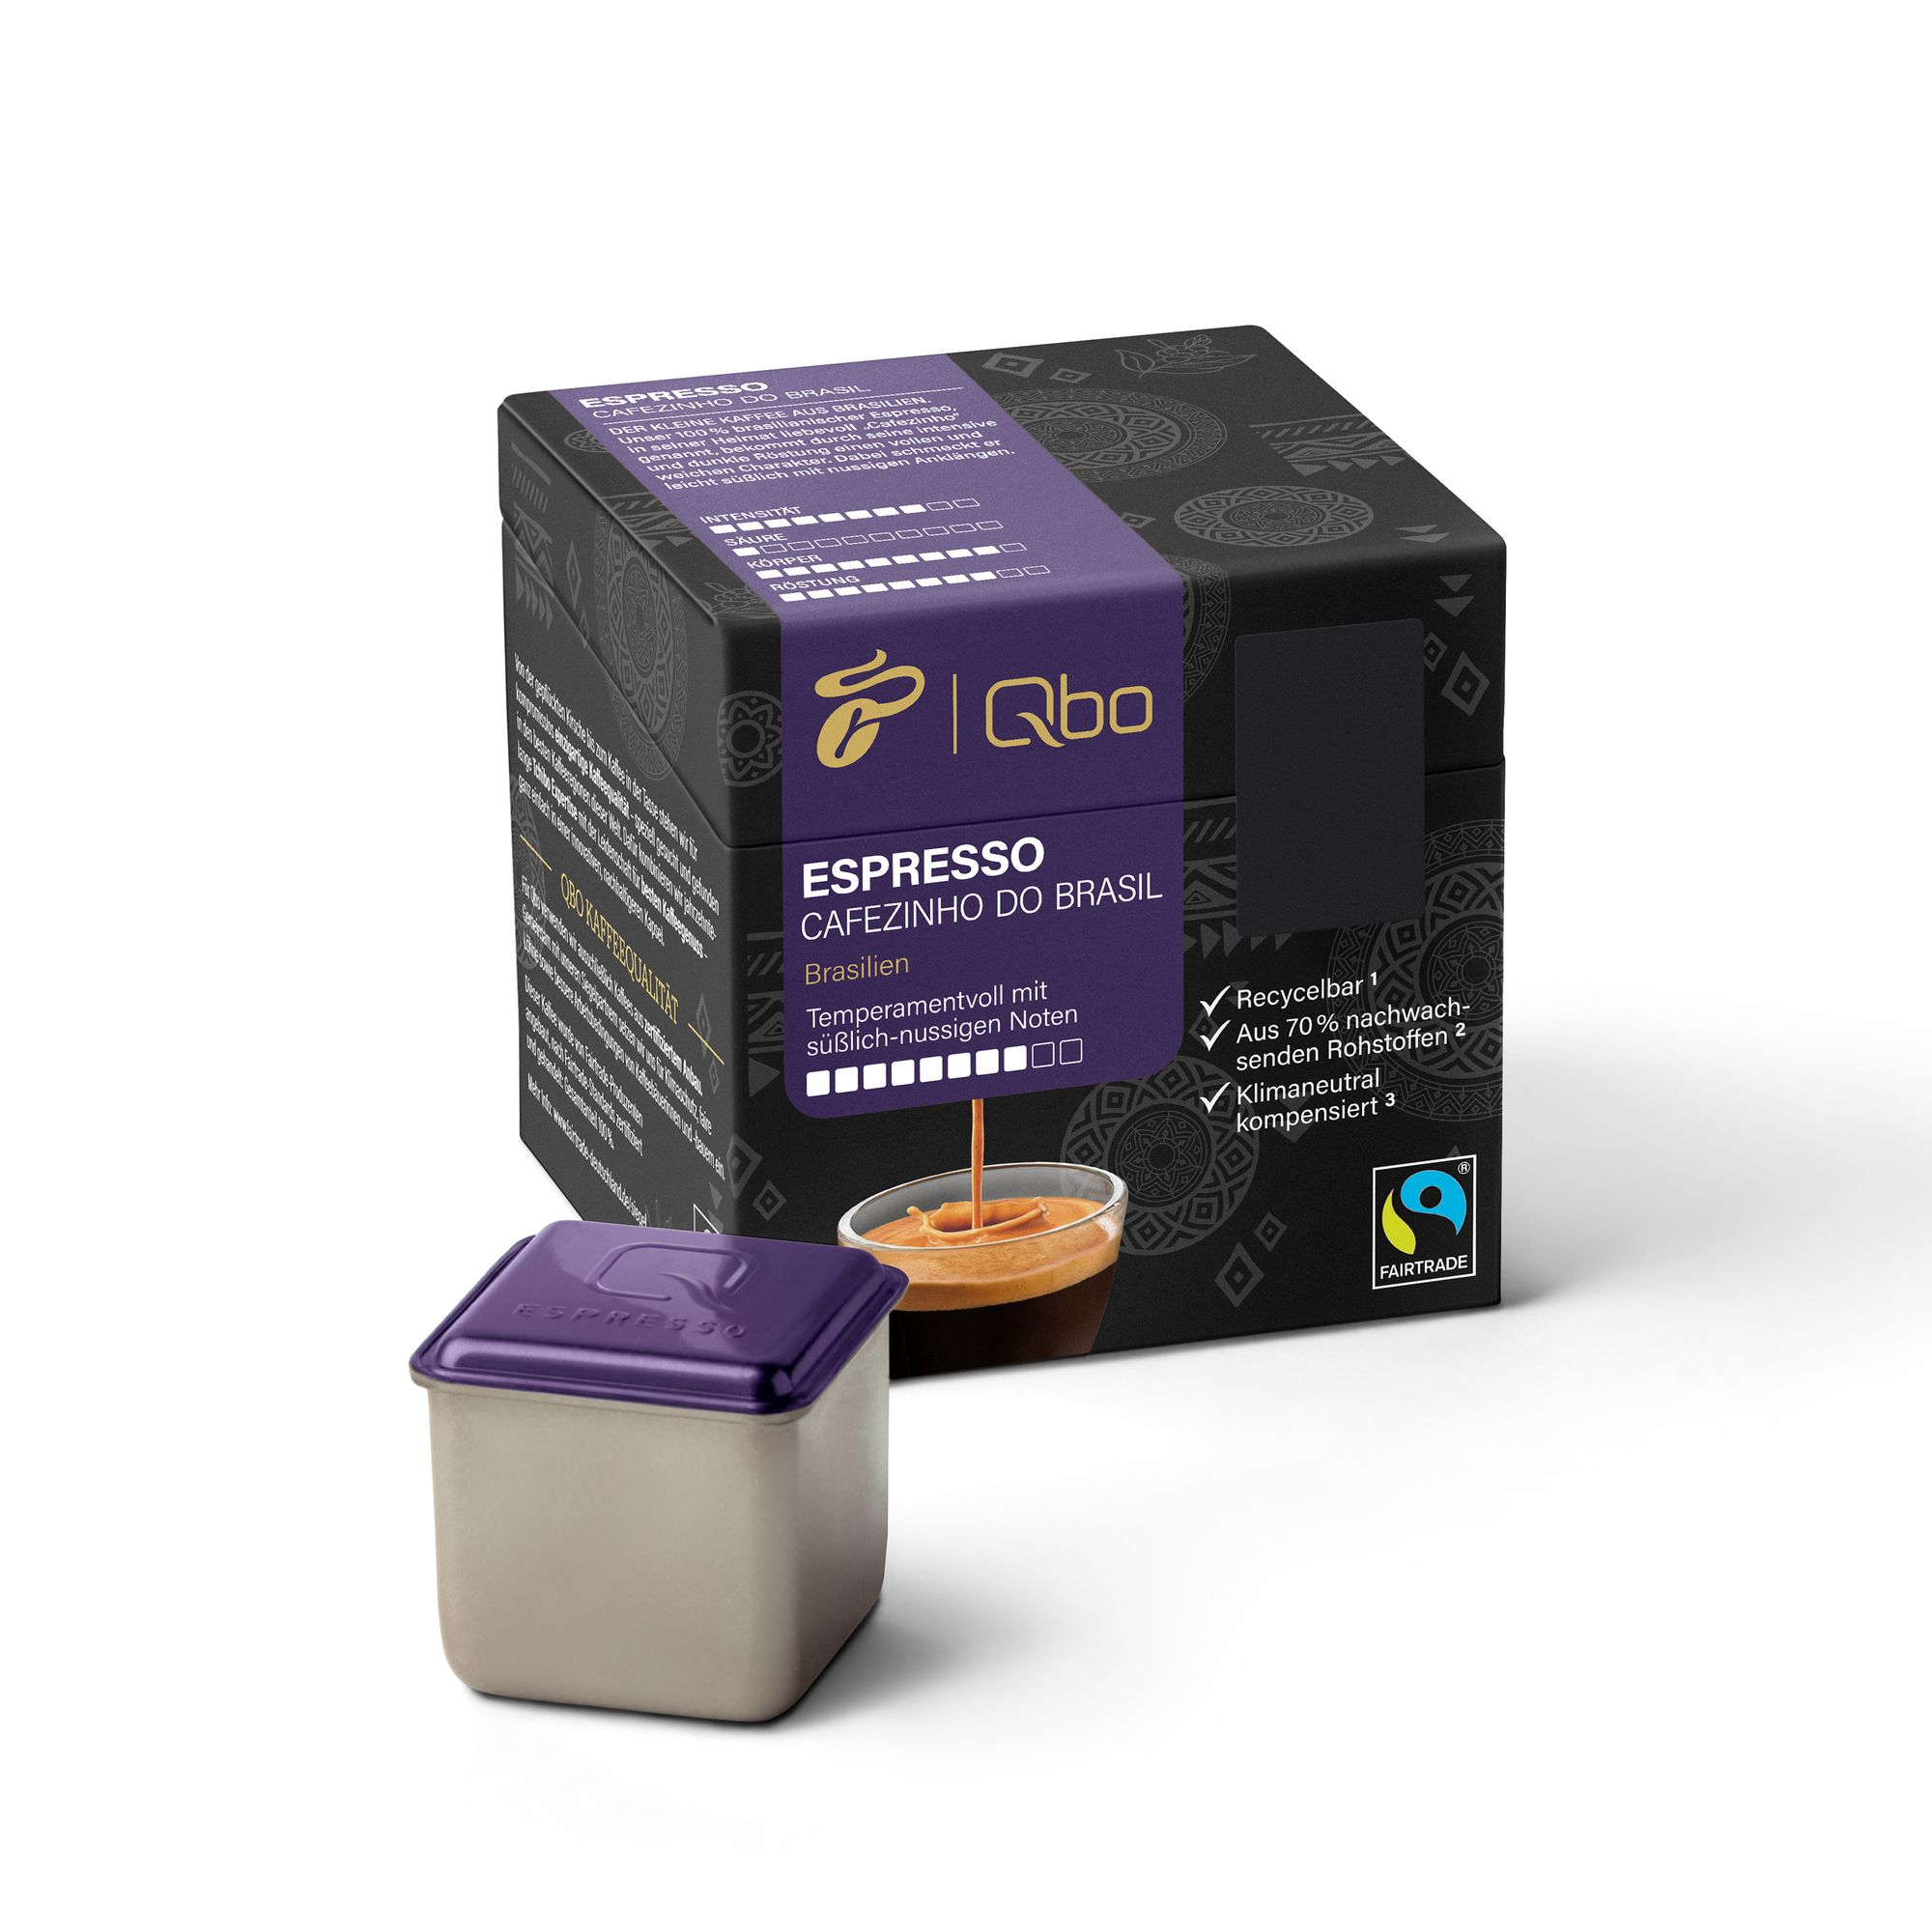 do TCHIBO Qbo Brasil Espresso 8 525778 Stück Kapselsystem) QBO Kaffeekapseln (Tchibo Cafezinho